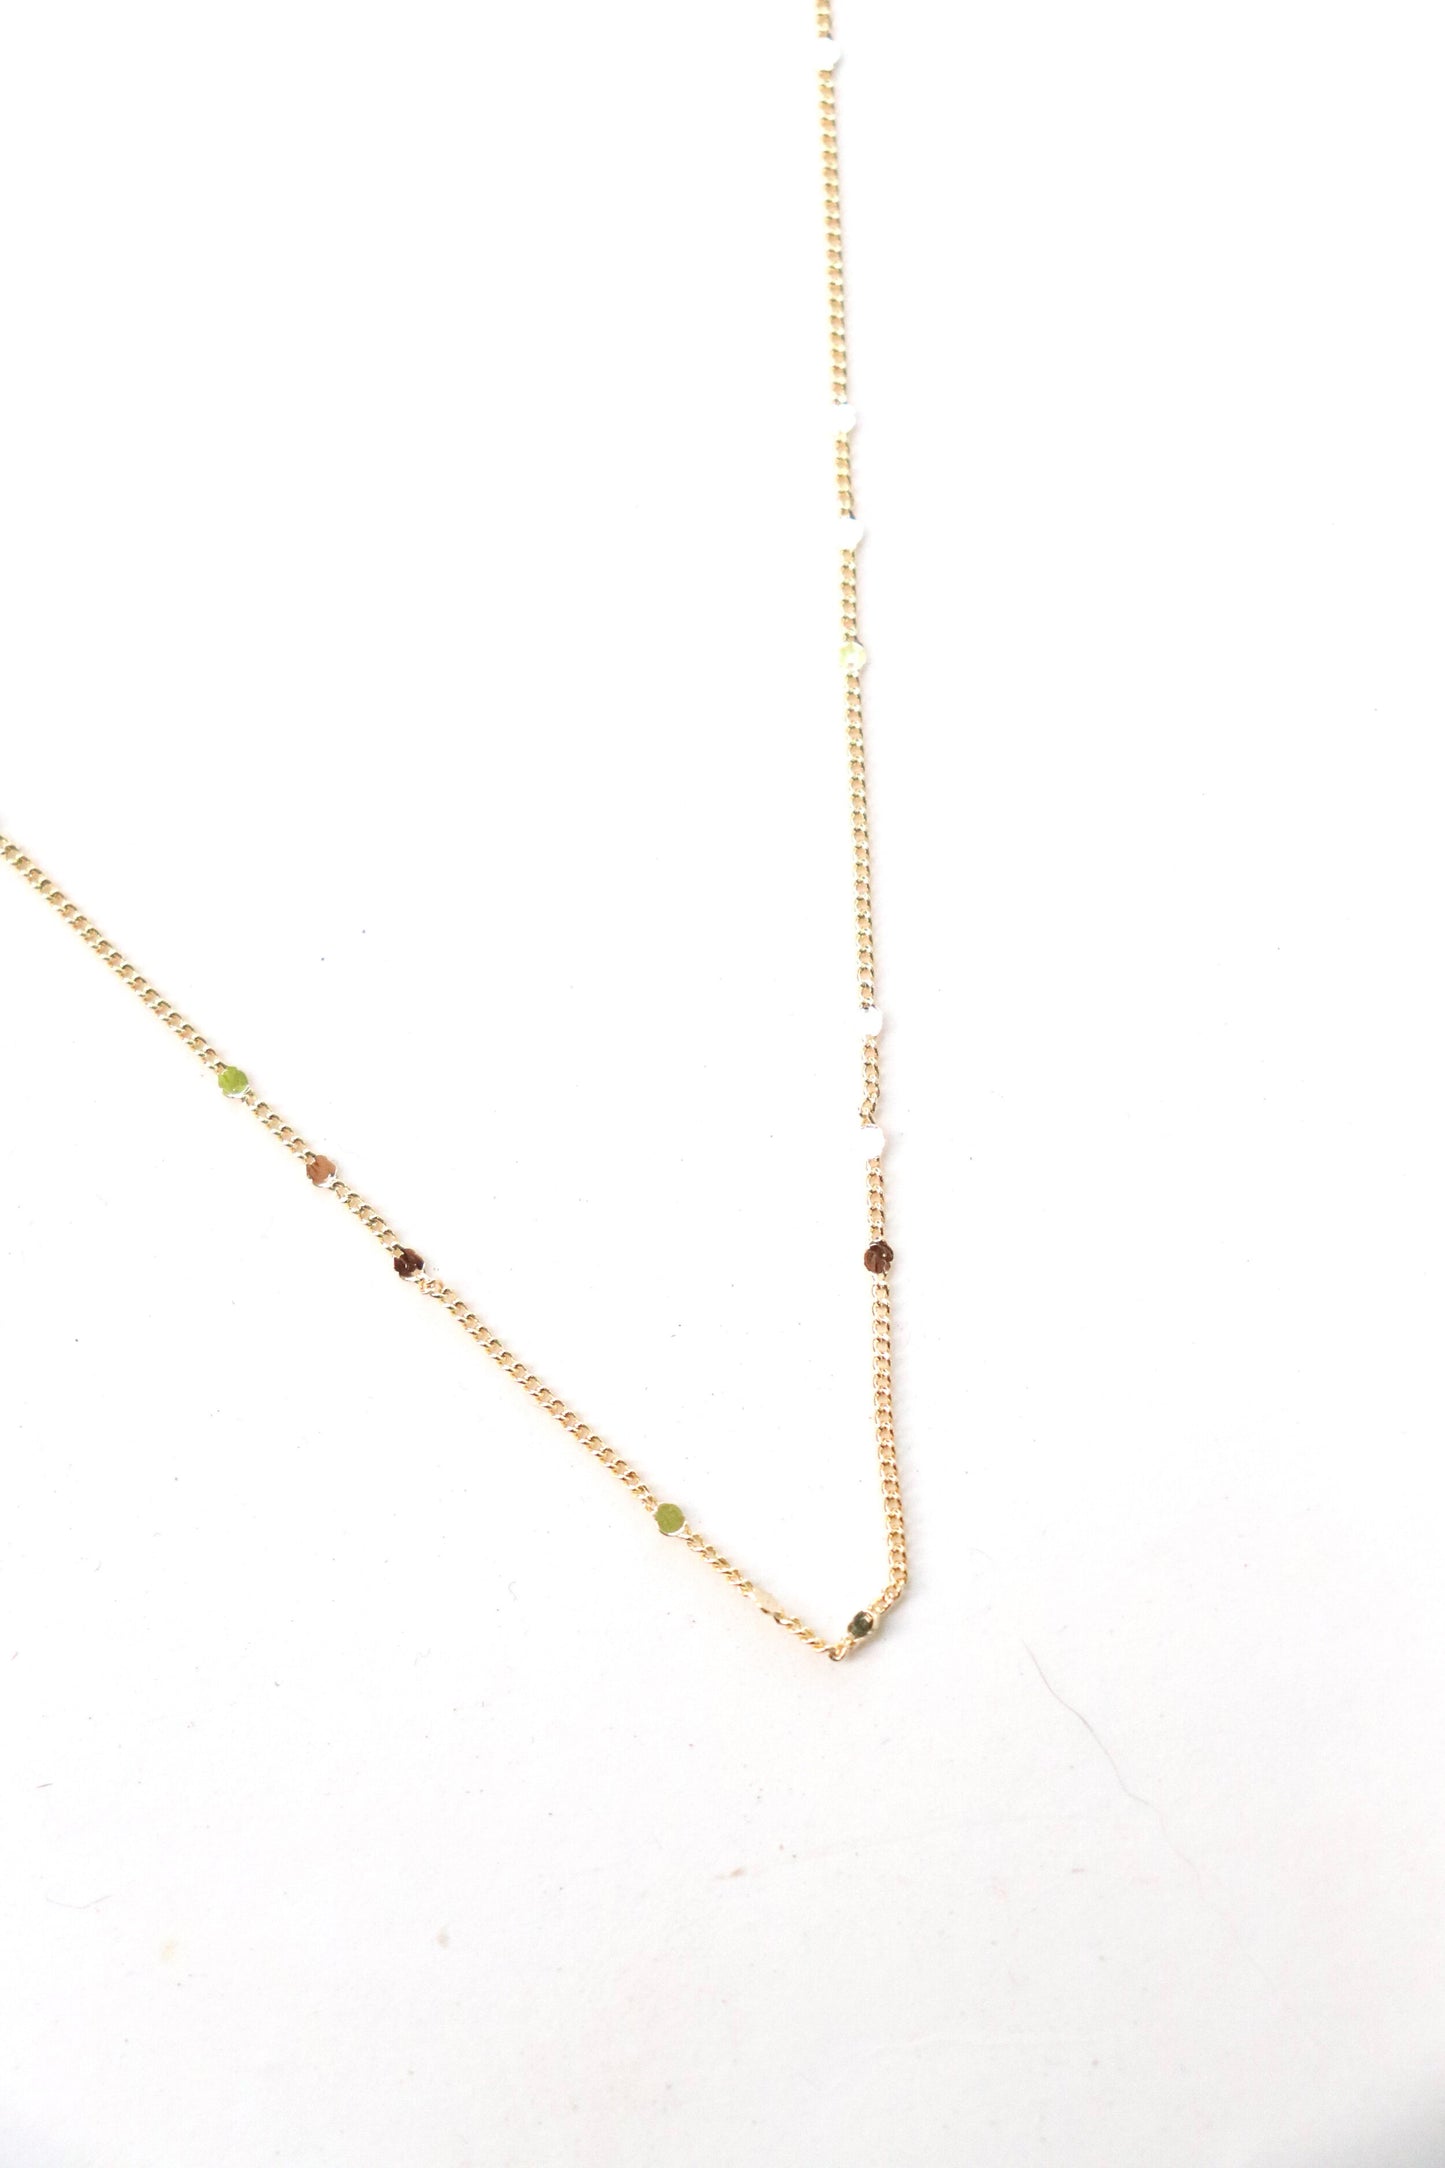 Meg Gold Chain Necklace - Gold